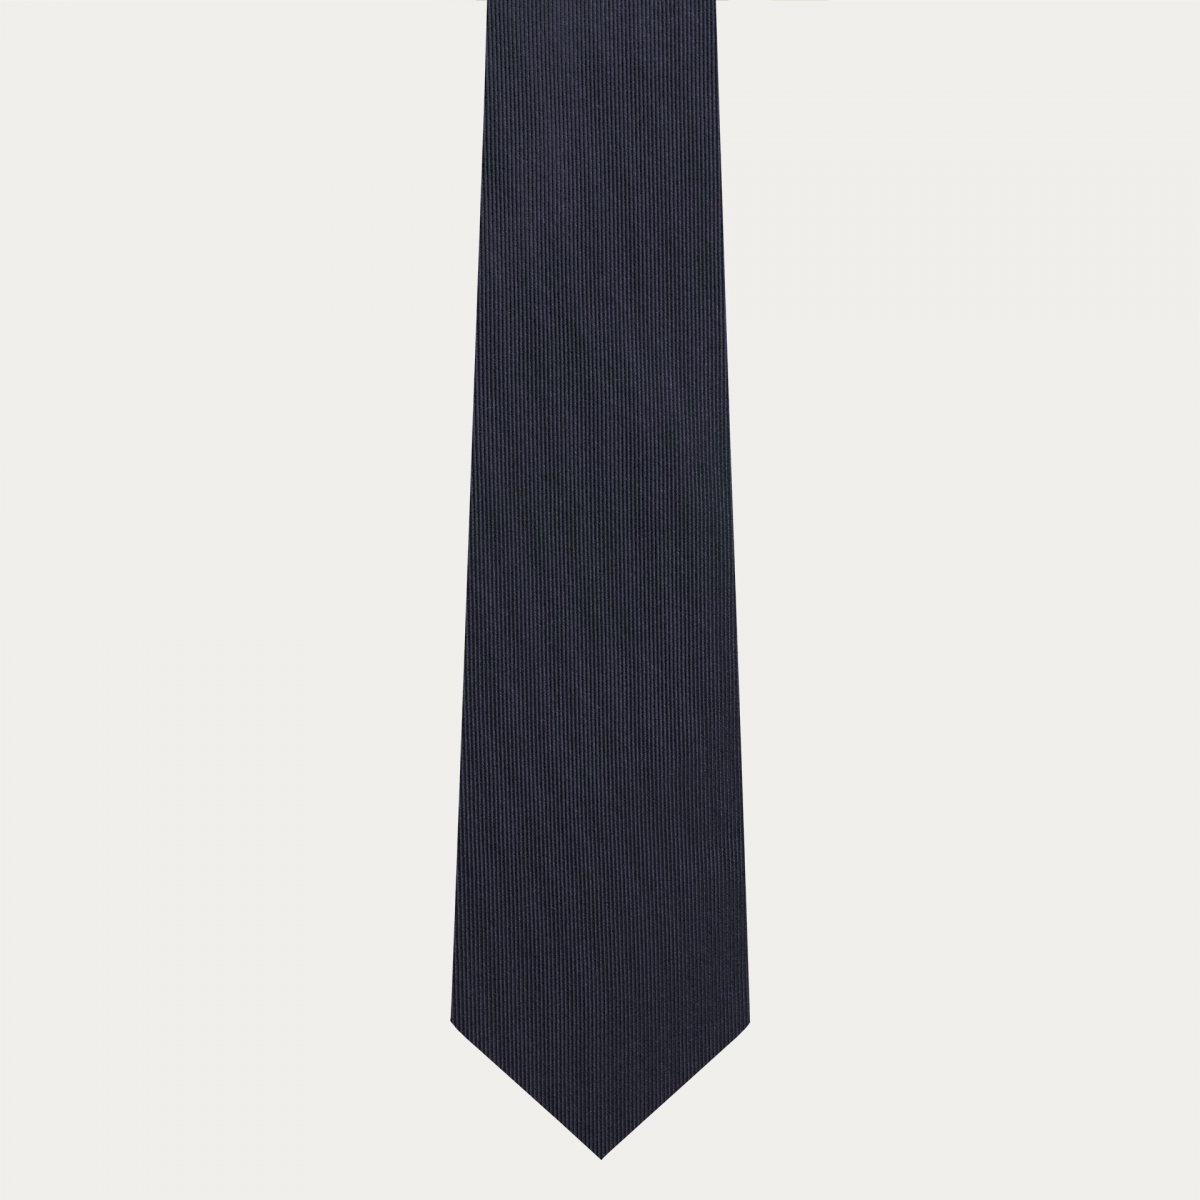 Set coordinato cravatta e bretelle per bottoni in seta blu navy